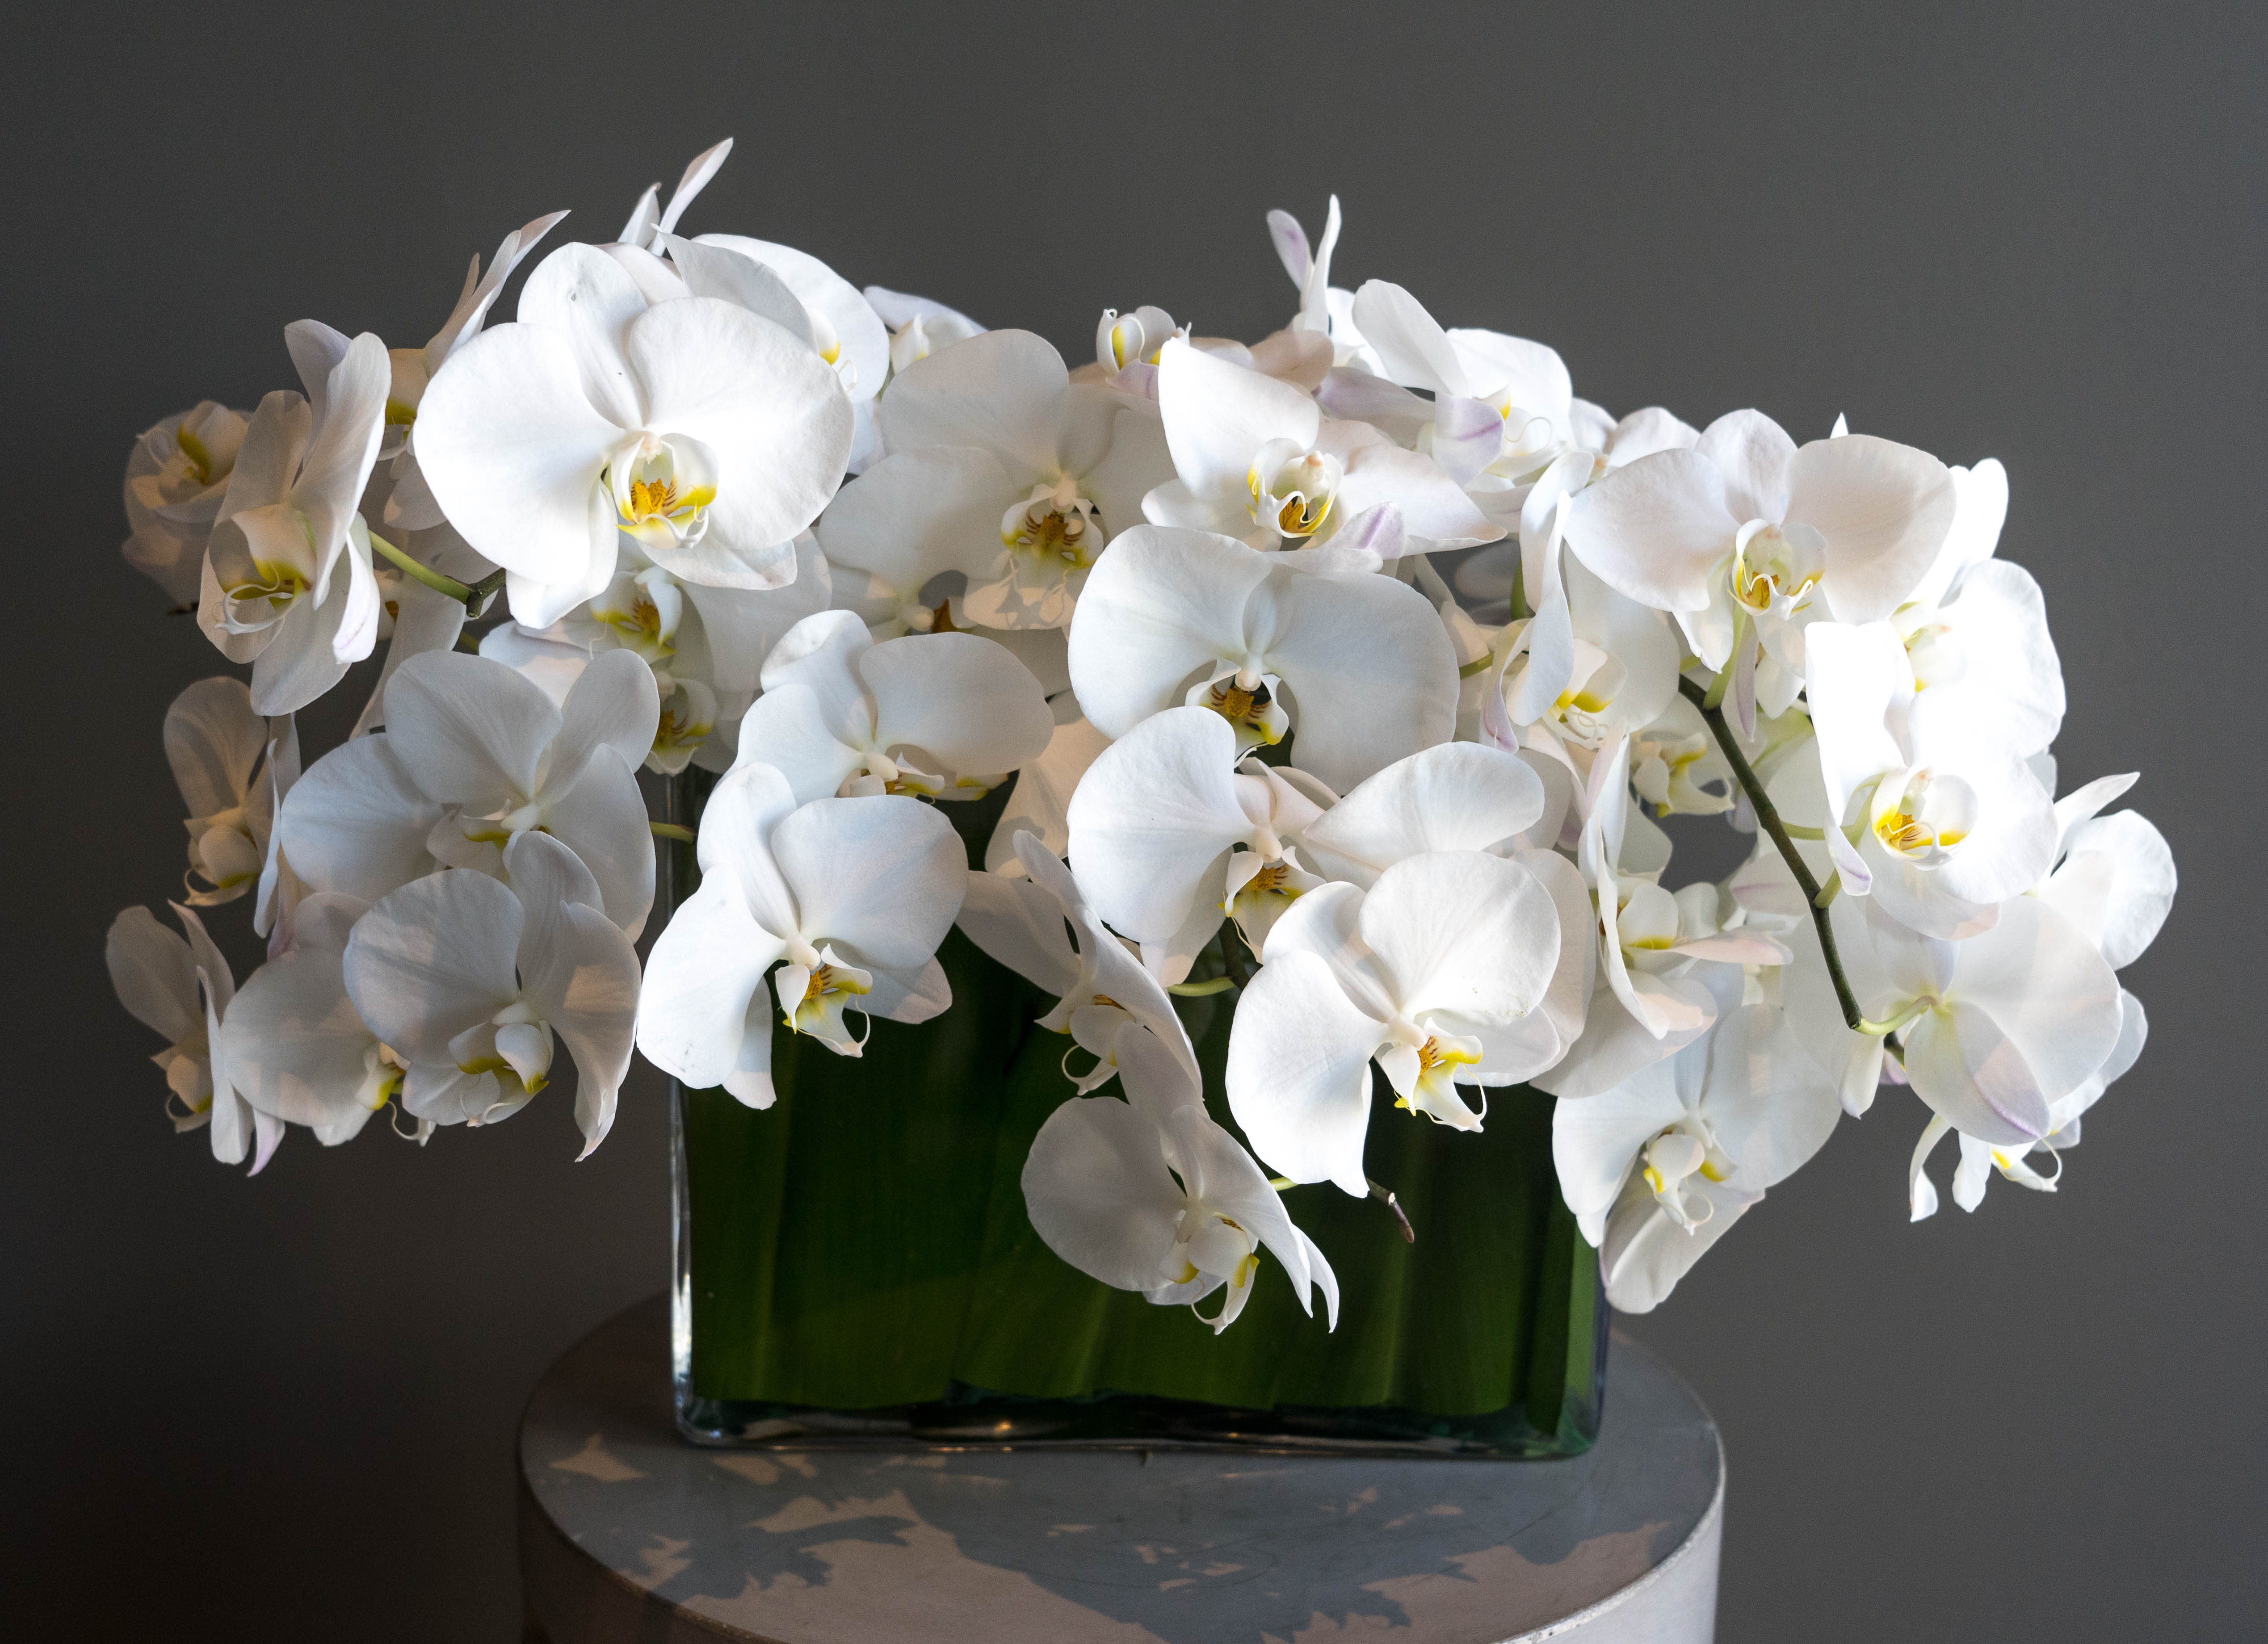 Orchid Arrangements - The Campbell